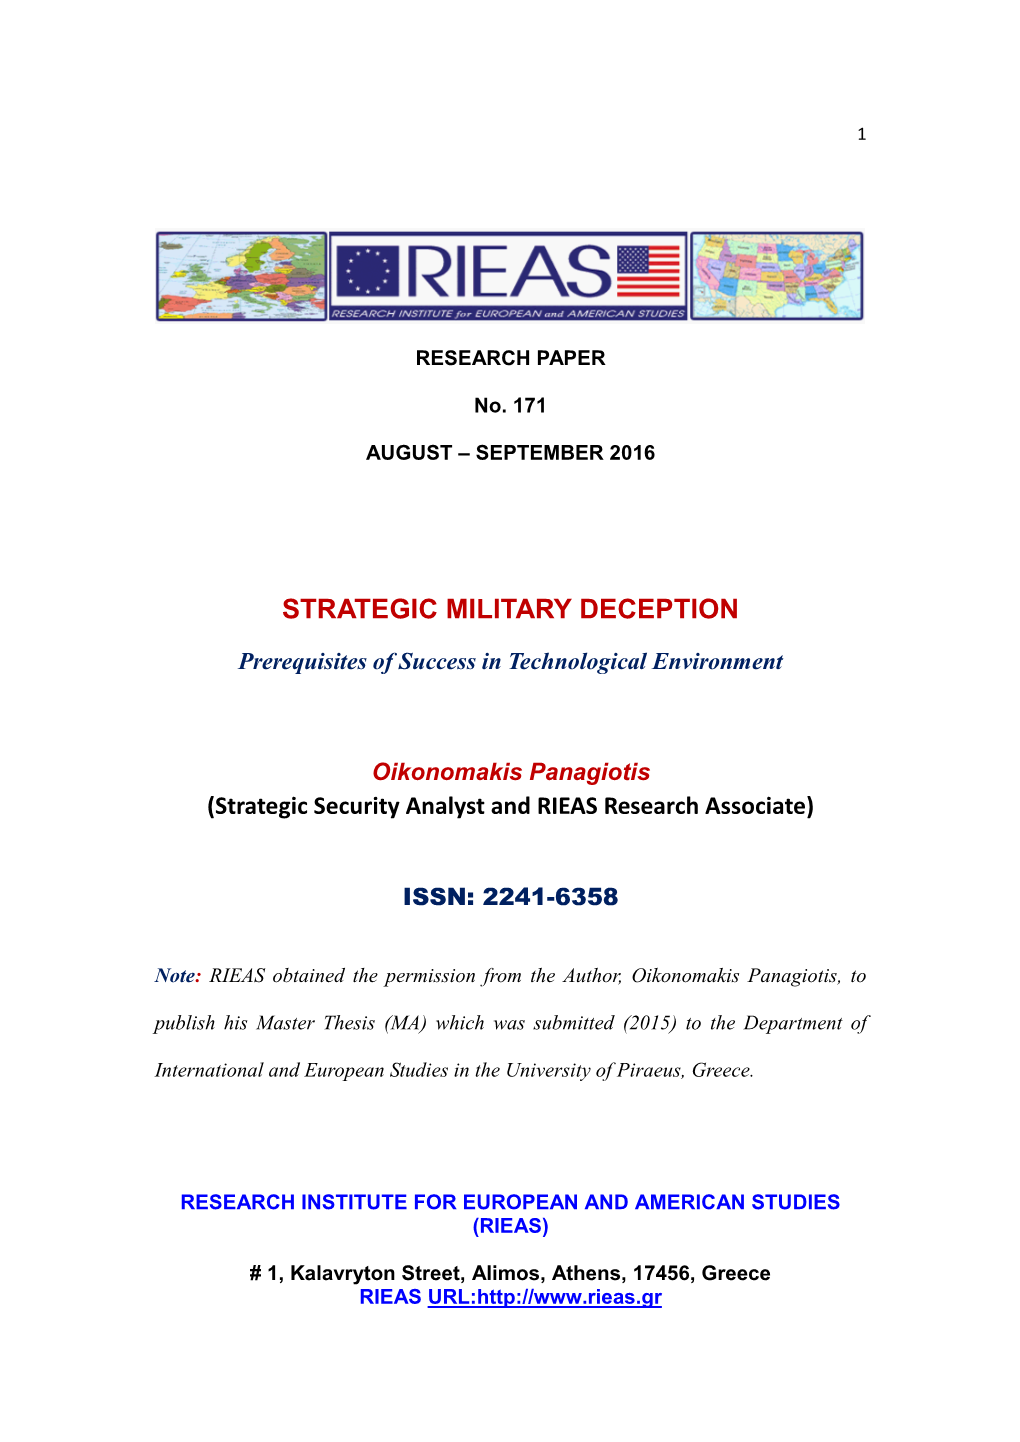 Strategic Military Deception